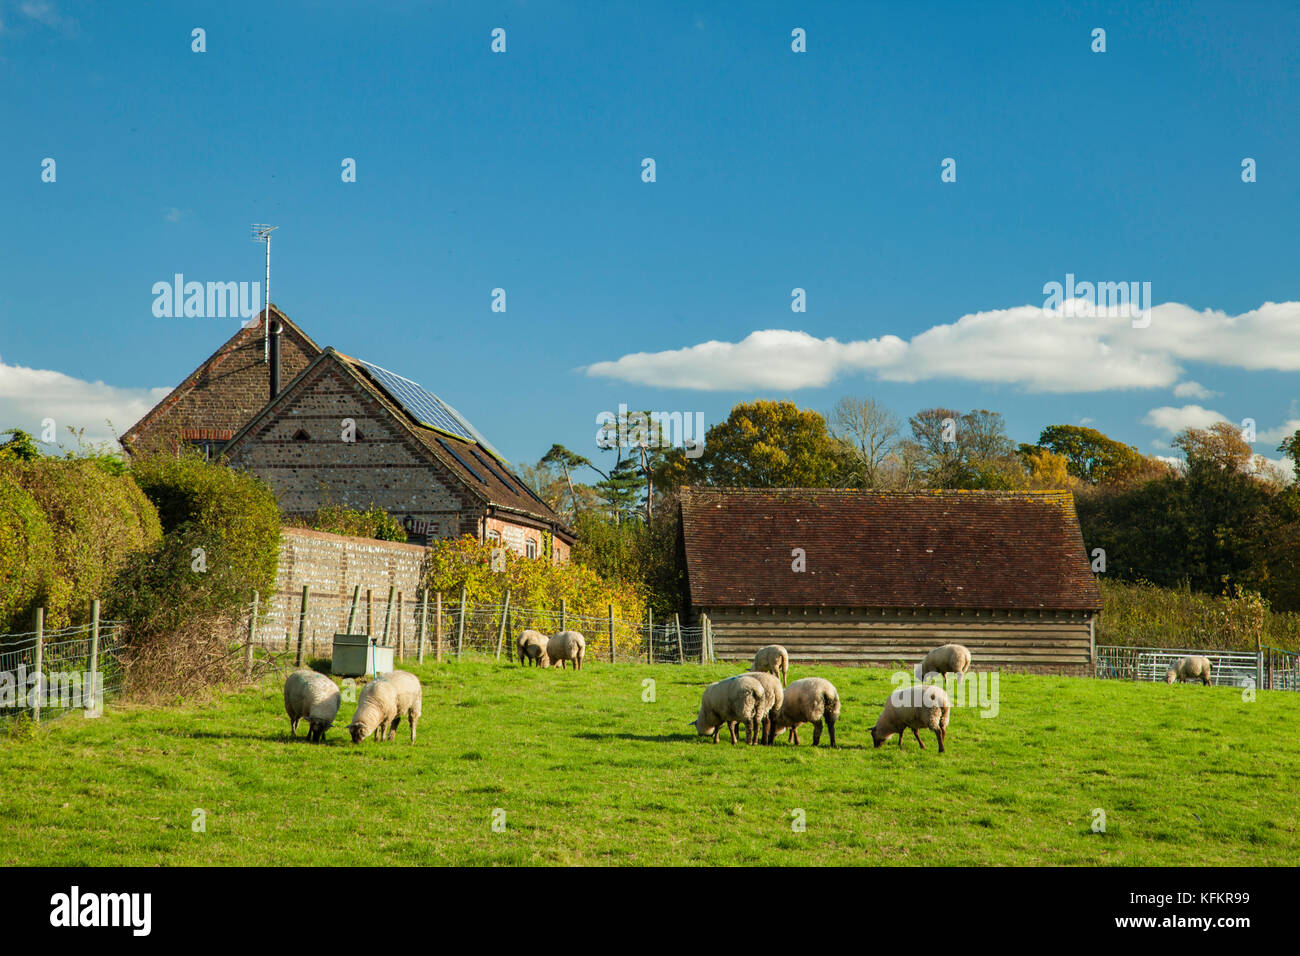 Sheep grazing near Hurstpierpoint, West Sussex, England. Stock Photo